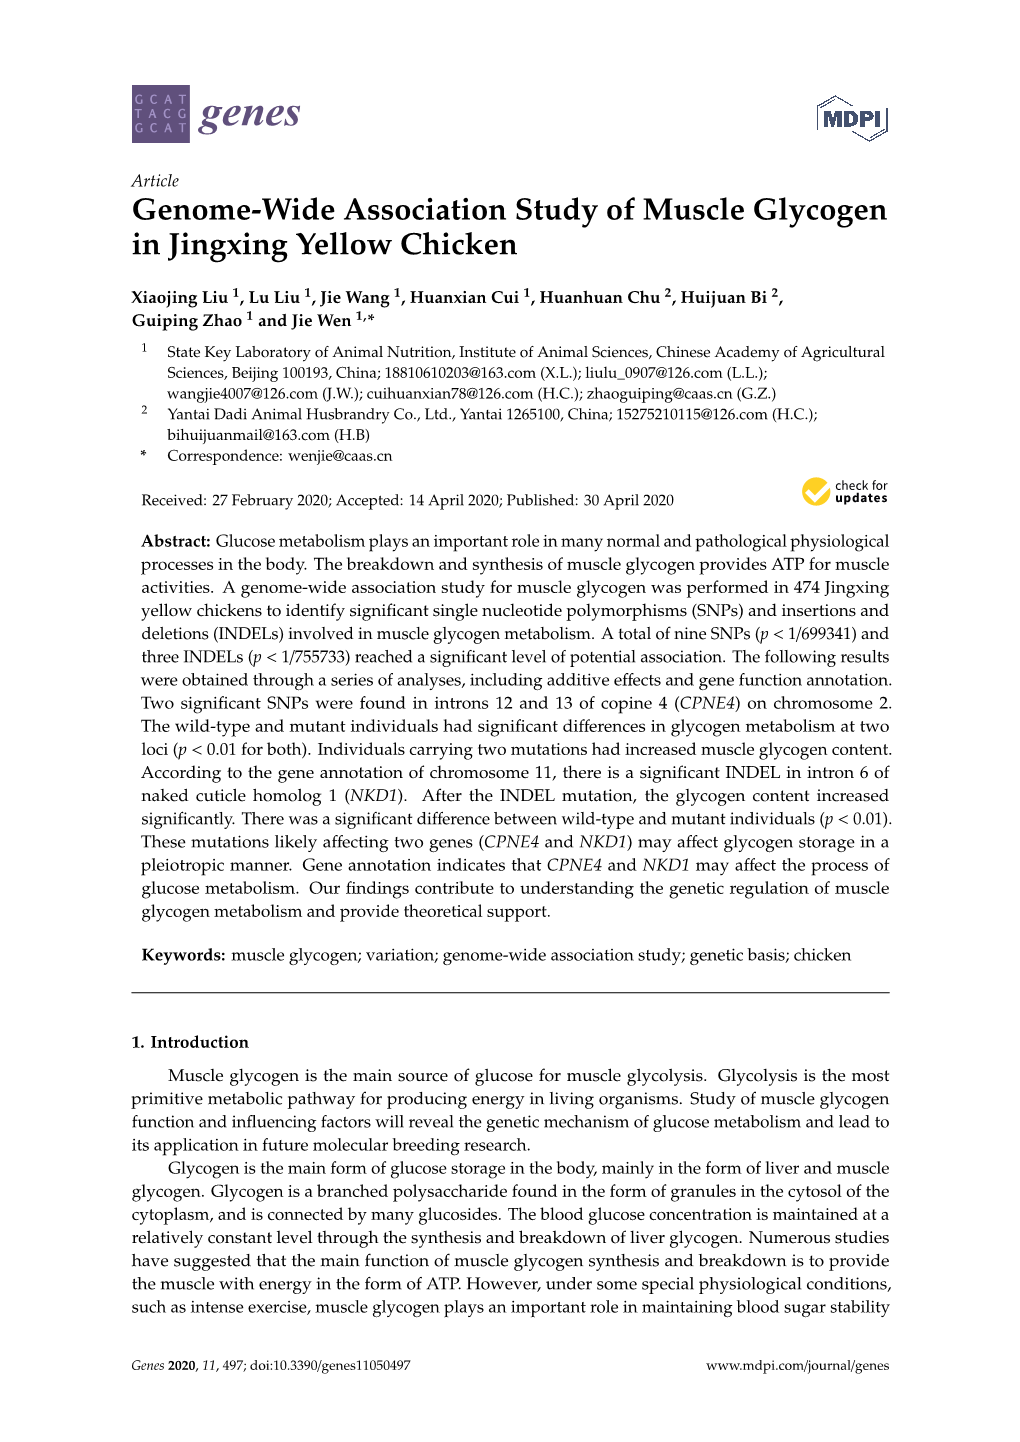 Genome-Wide Association Study of Muscle Glycogen in Jingxing Yellow Chicken